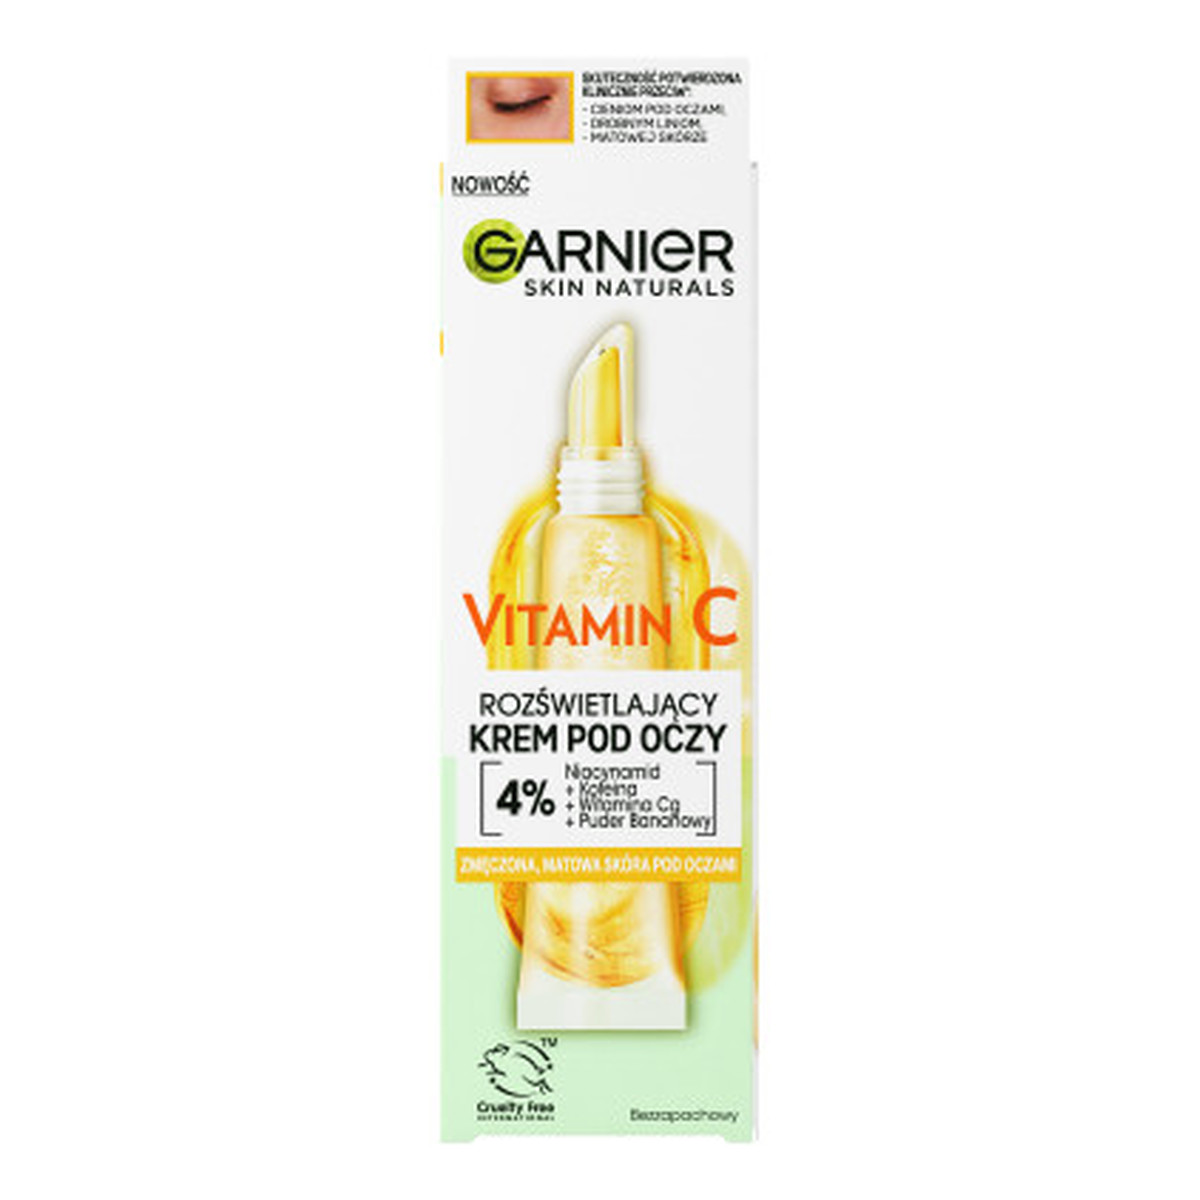 Garnier Skin Naturals Vitamin C rozświetlający Krem pod oczy 15ml